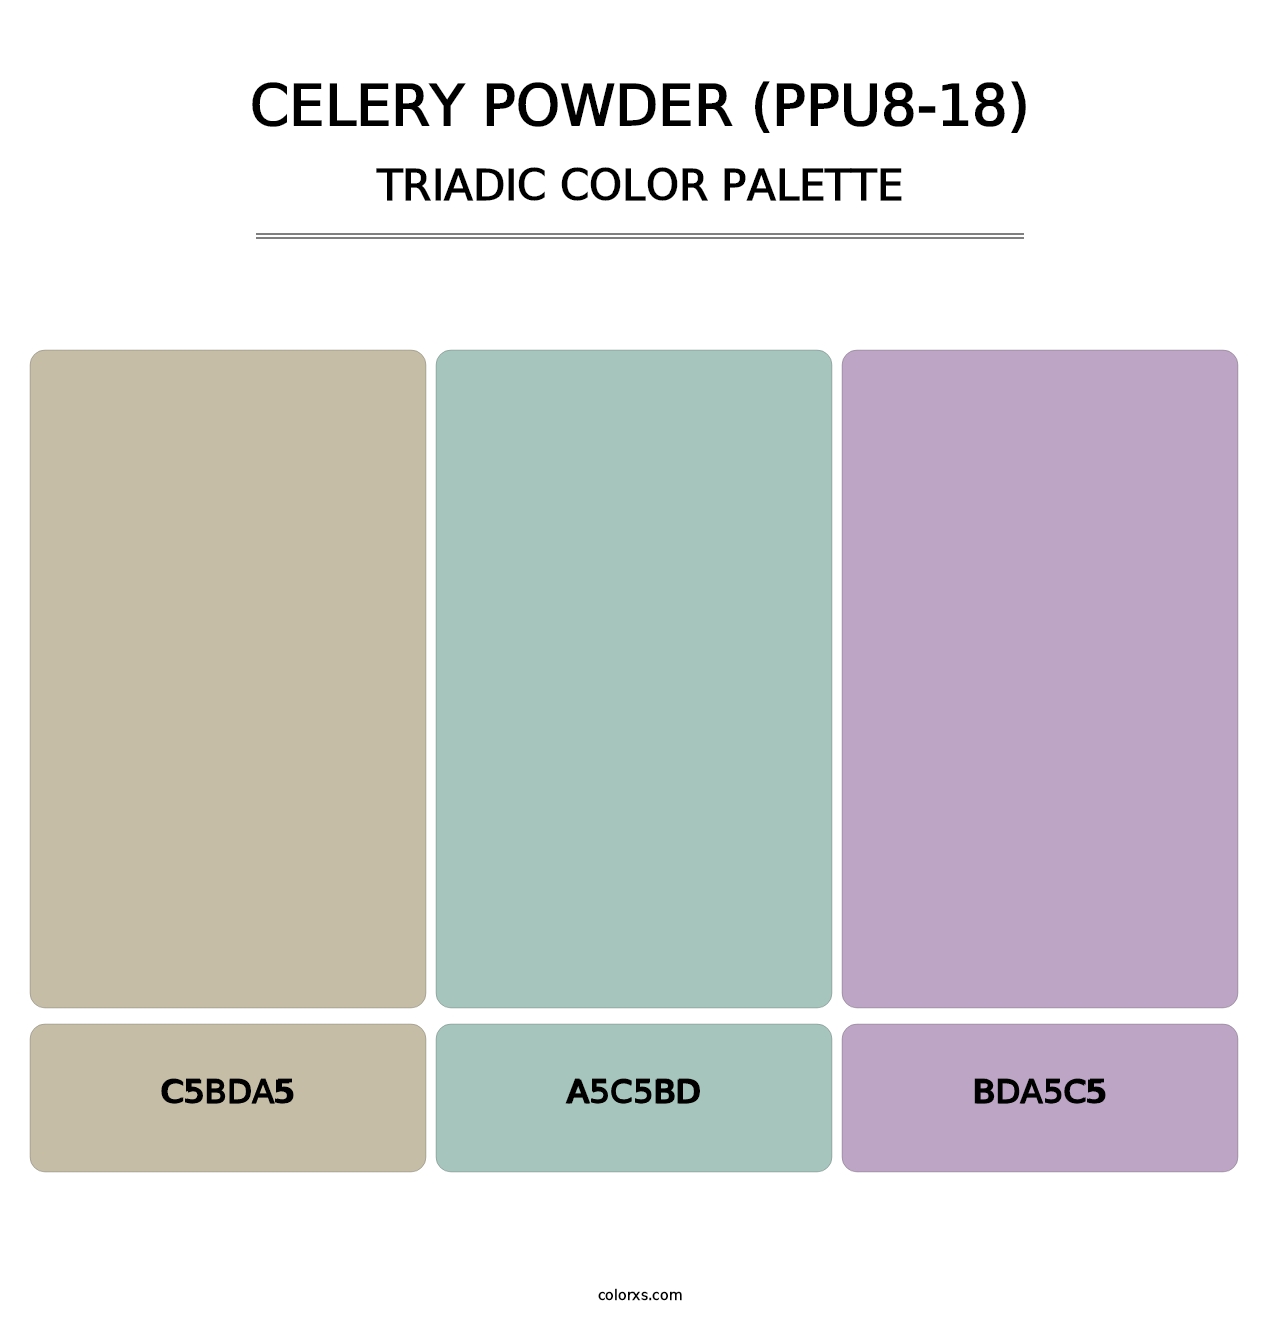 Celery Powder (PPU8-18) - Triadic Color Palette